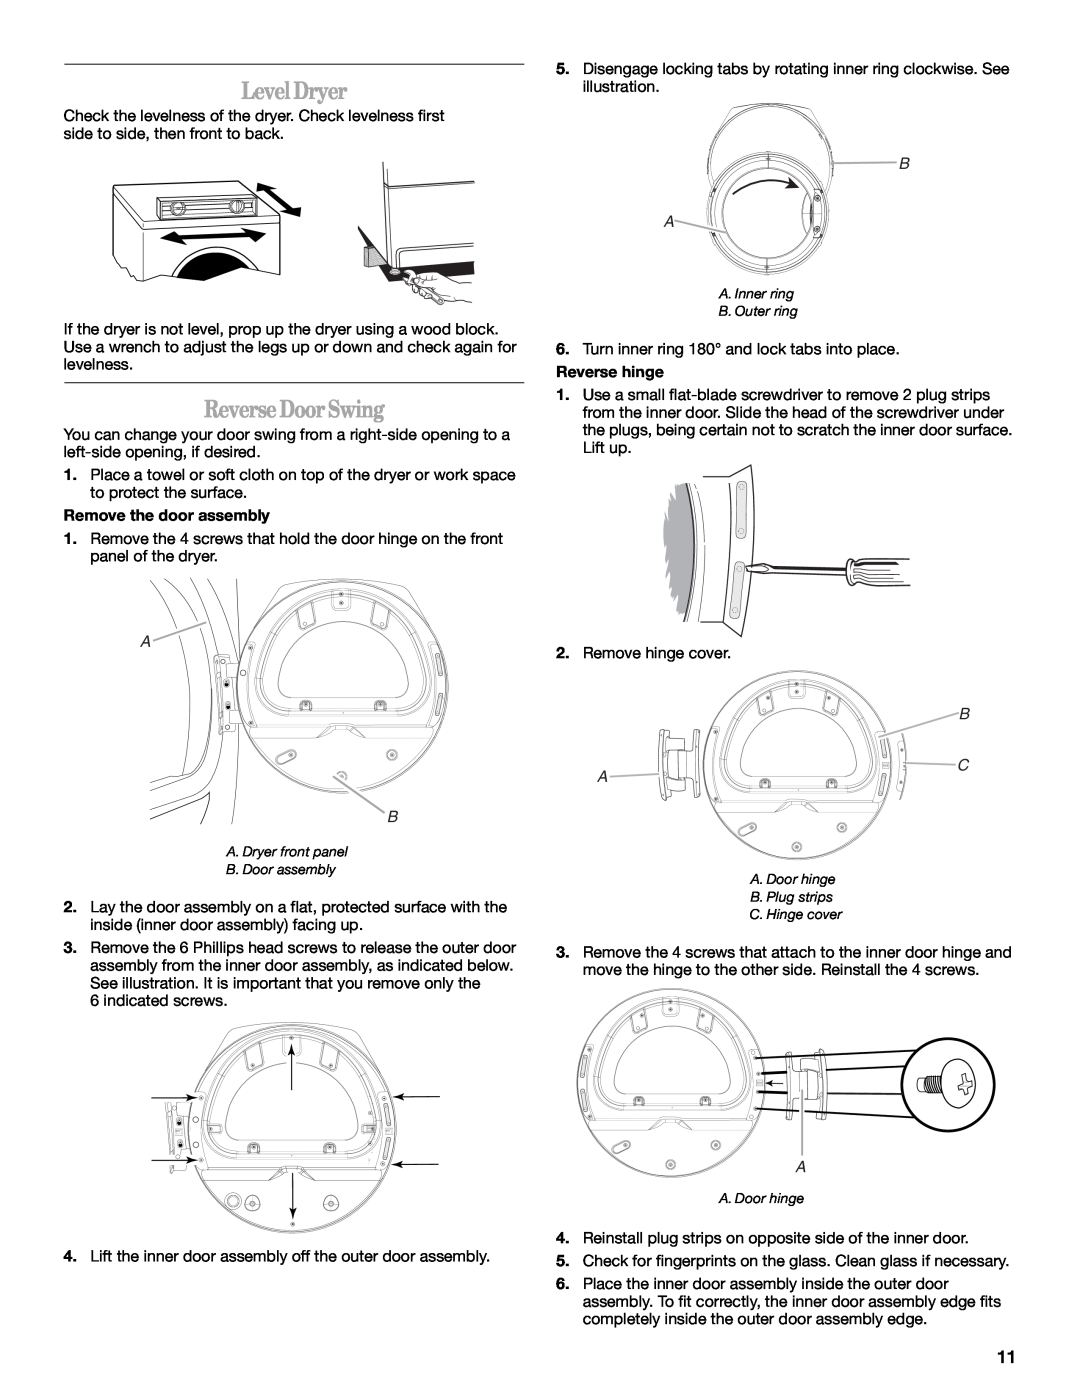 Whirlpool 8578901 manual LevelDryer, ReverseDoorSwing, B C A, Remove the door assembly, Reverse hinge 